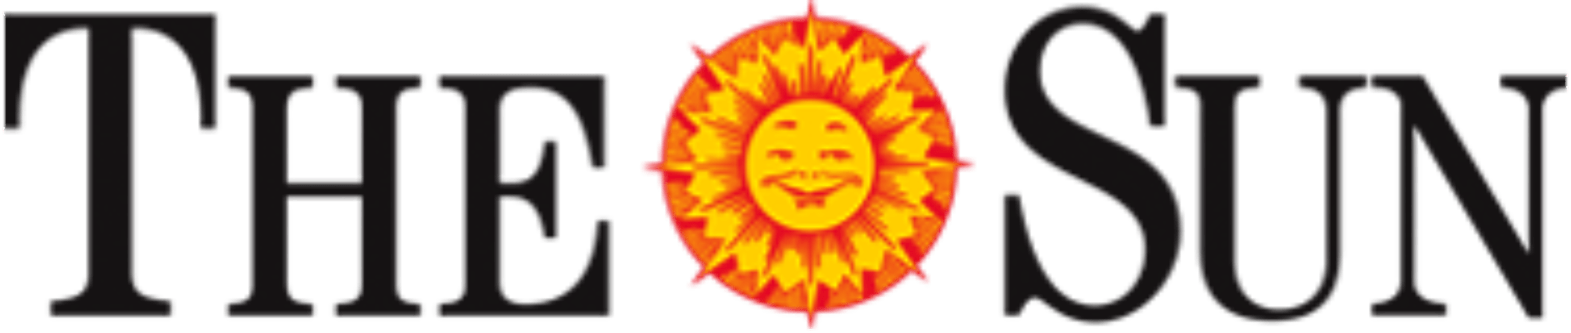 The Lowell Sun